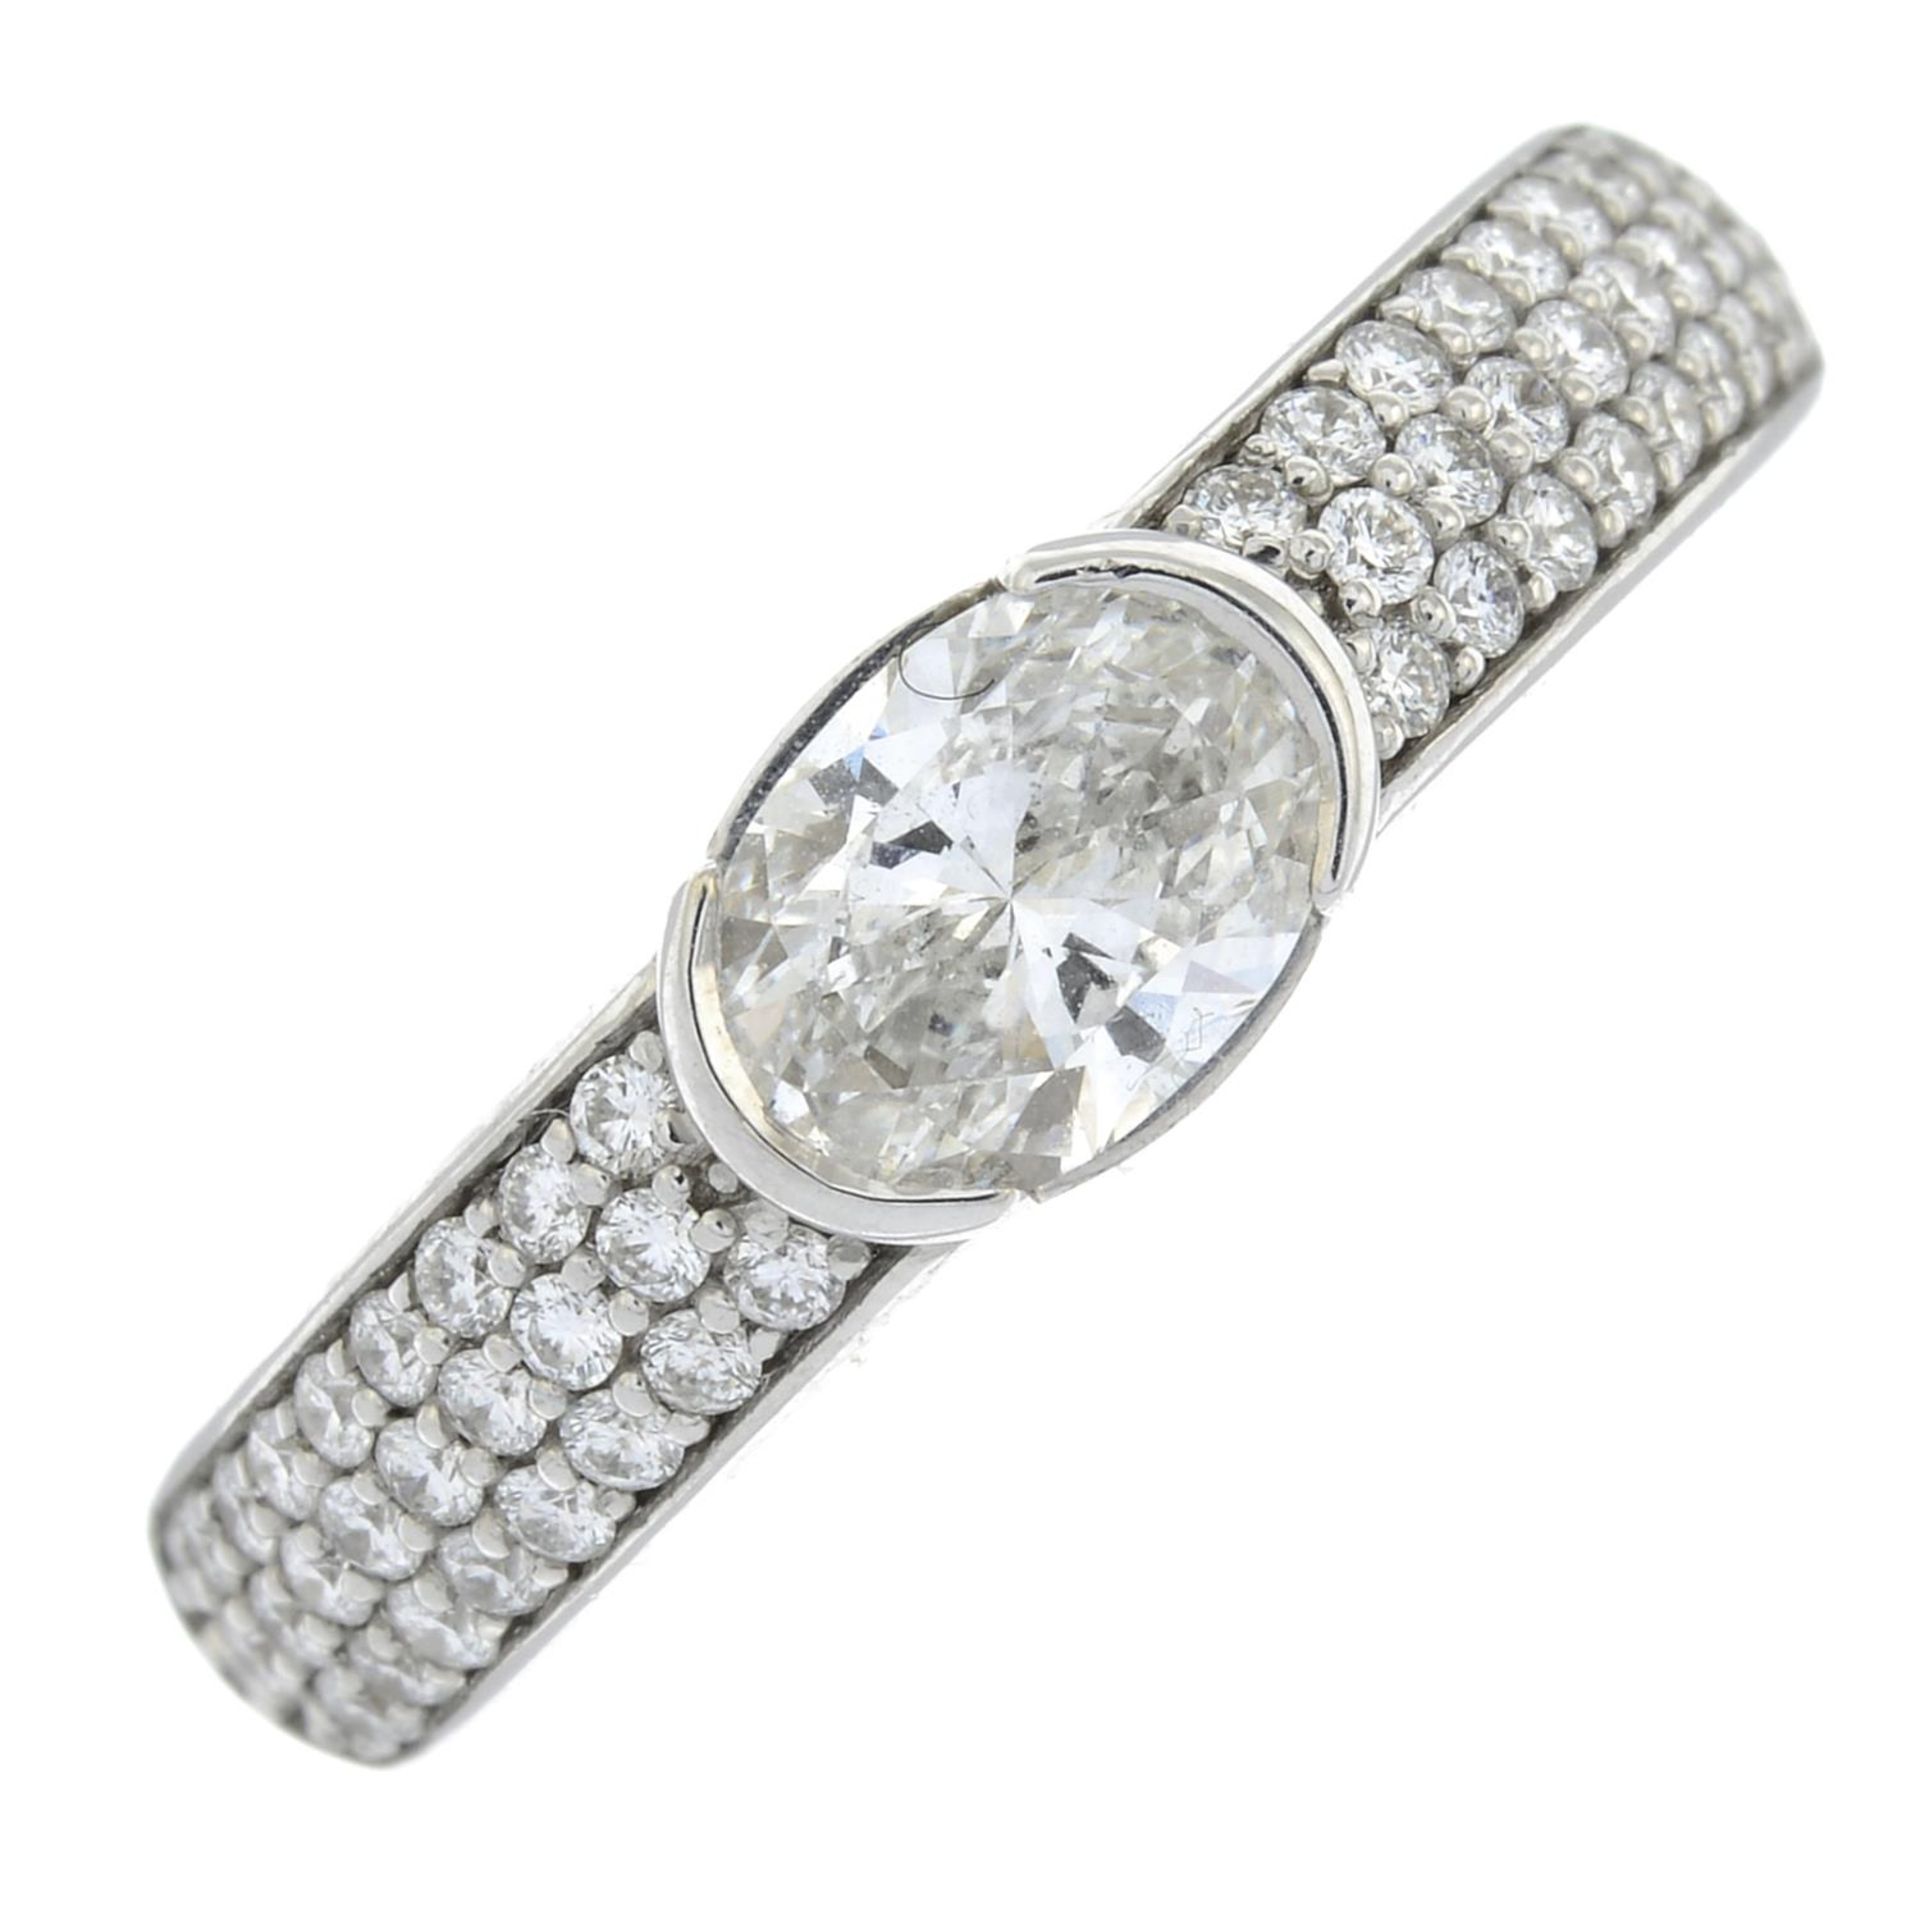 An 18ct gold oval-shape diamond ring,